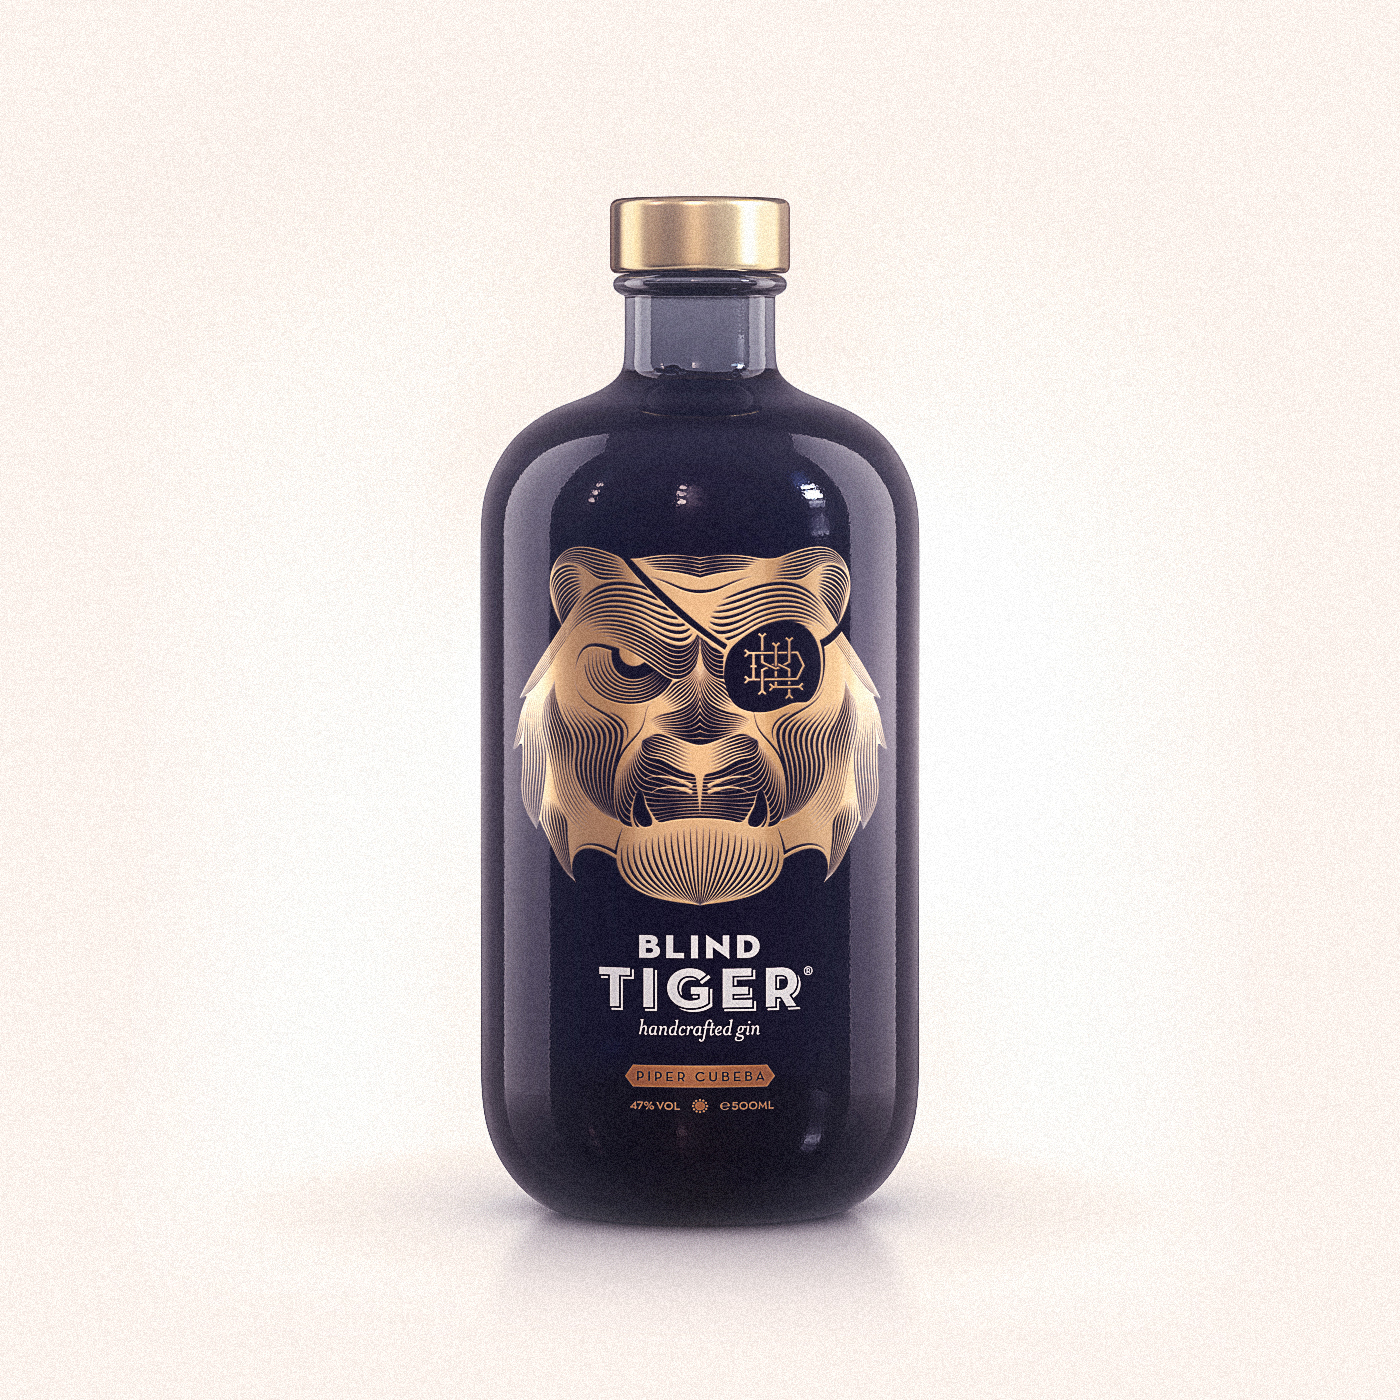 tiger blind gin bottle alcool Deluxe distillery wild line stripe moire effect gold